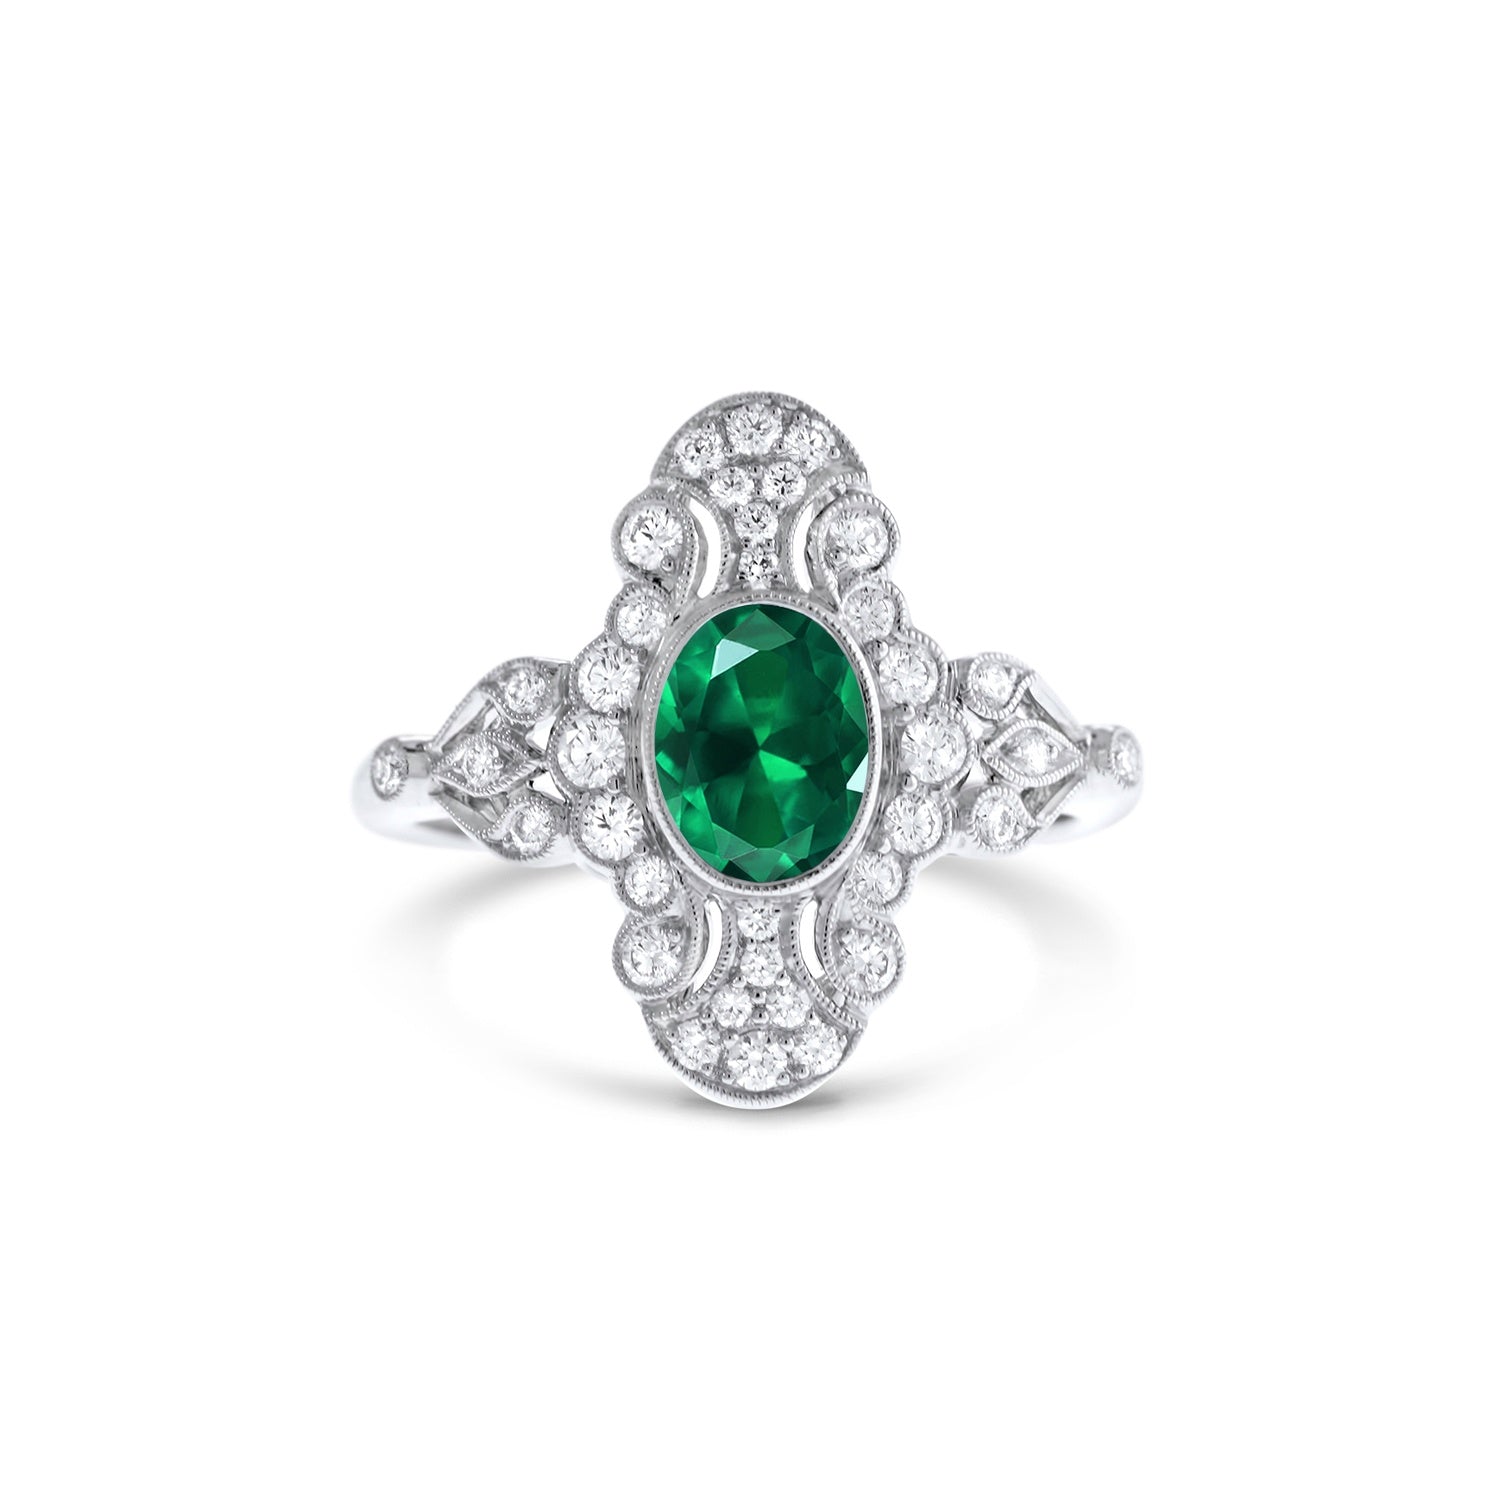 Art Deco inspired emerald and diamond dress ring